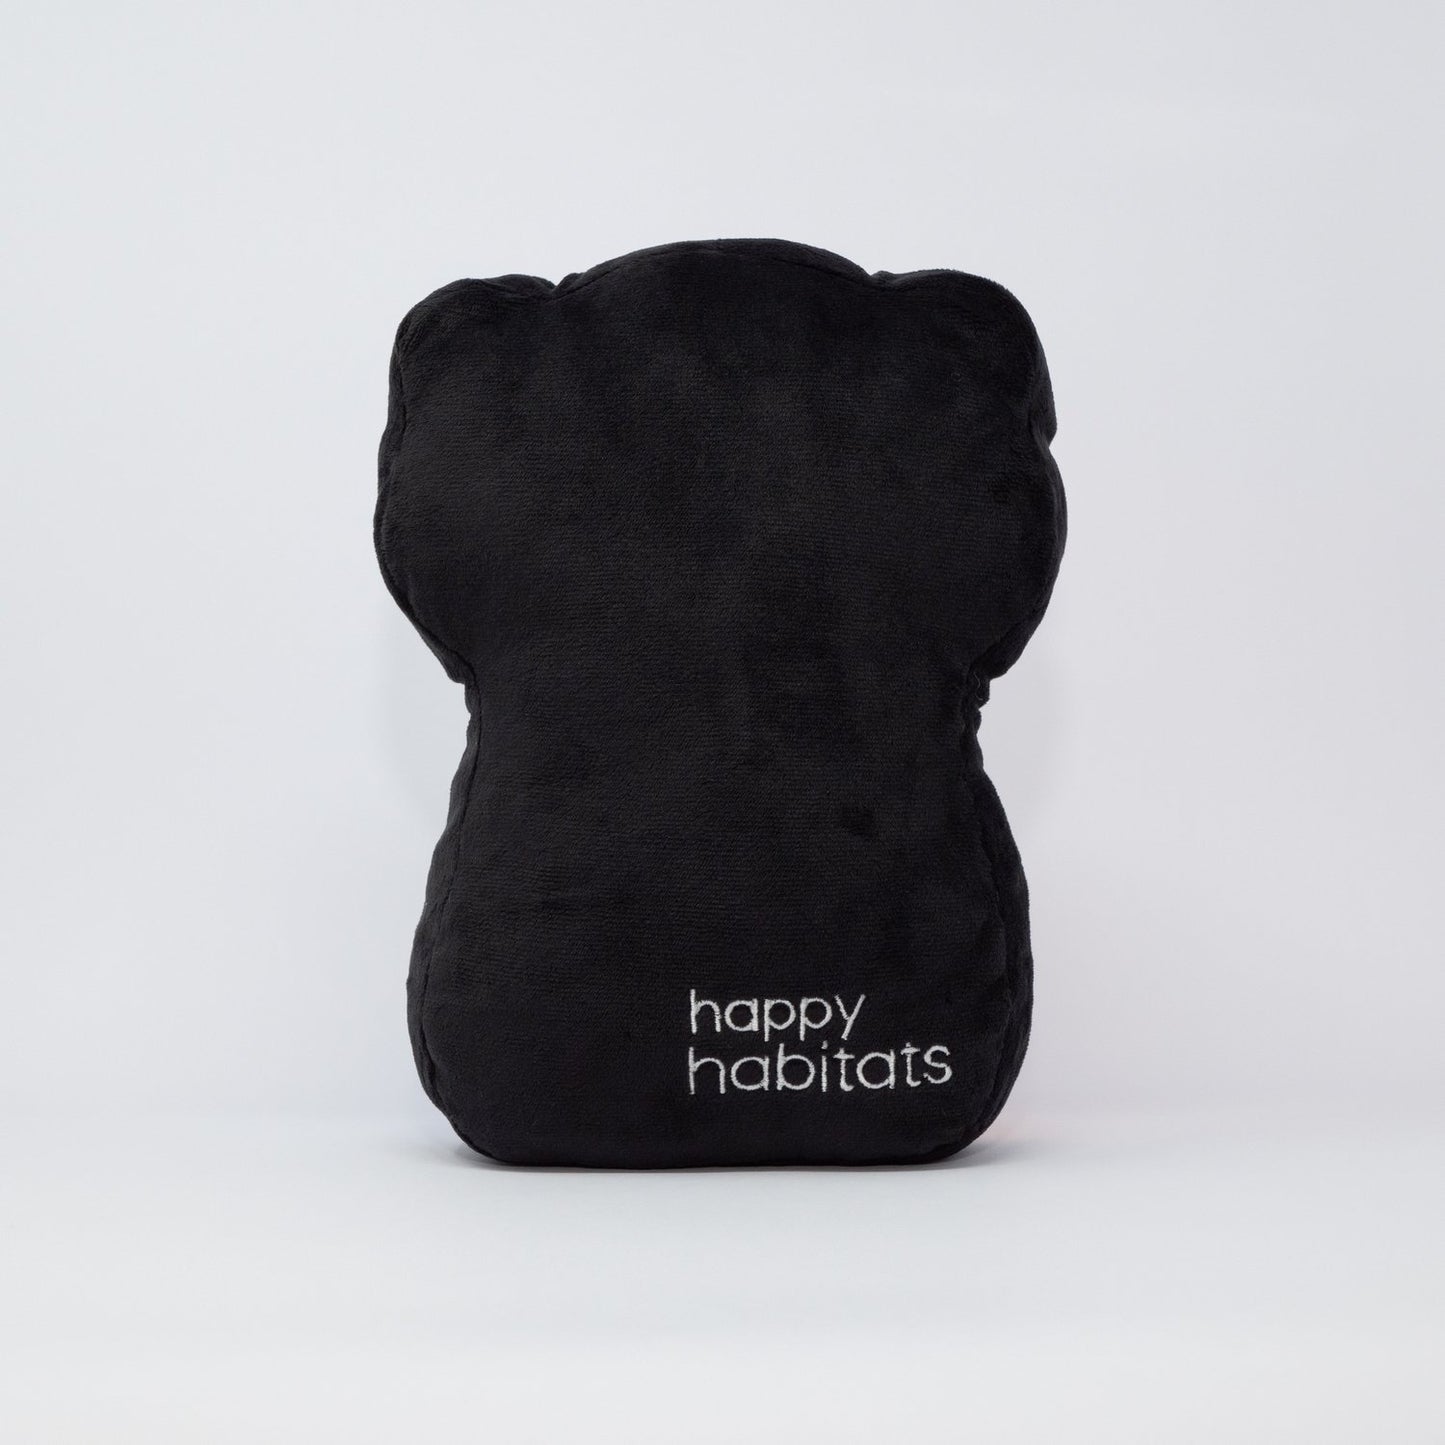 Happy Habitats' Logo Plush Pillow